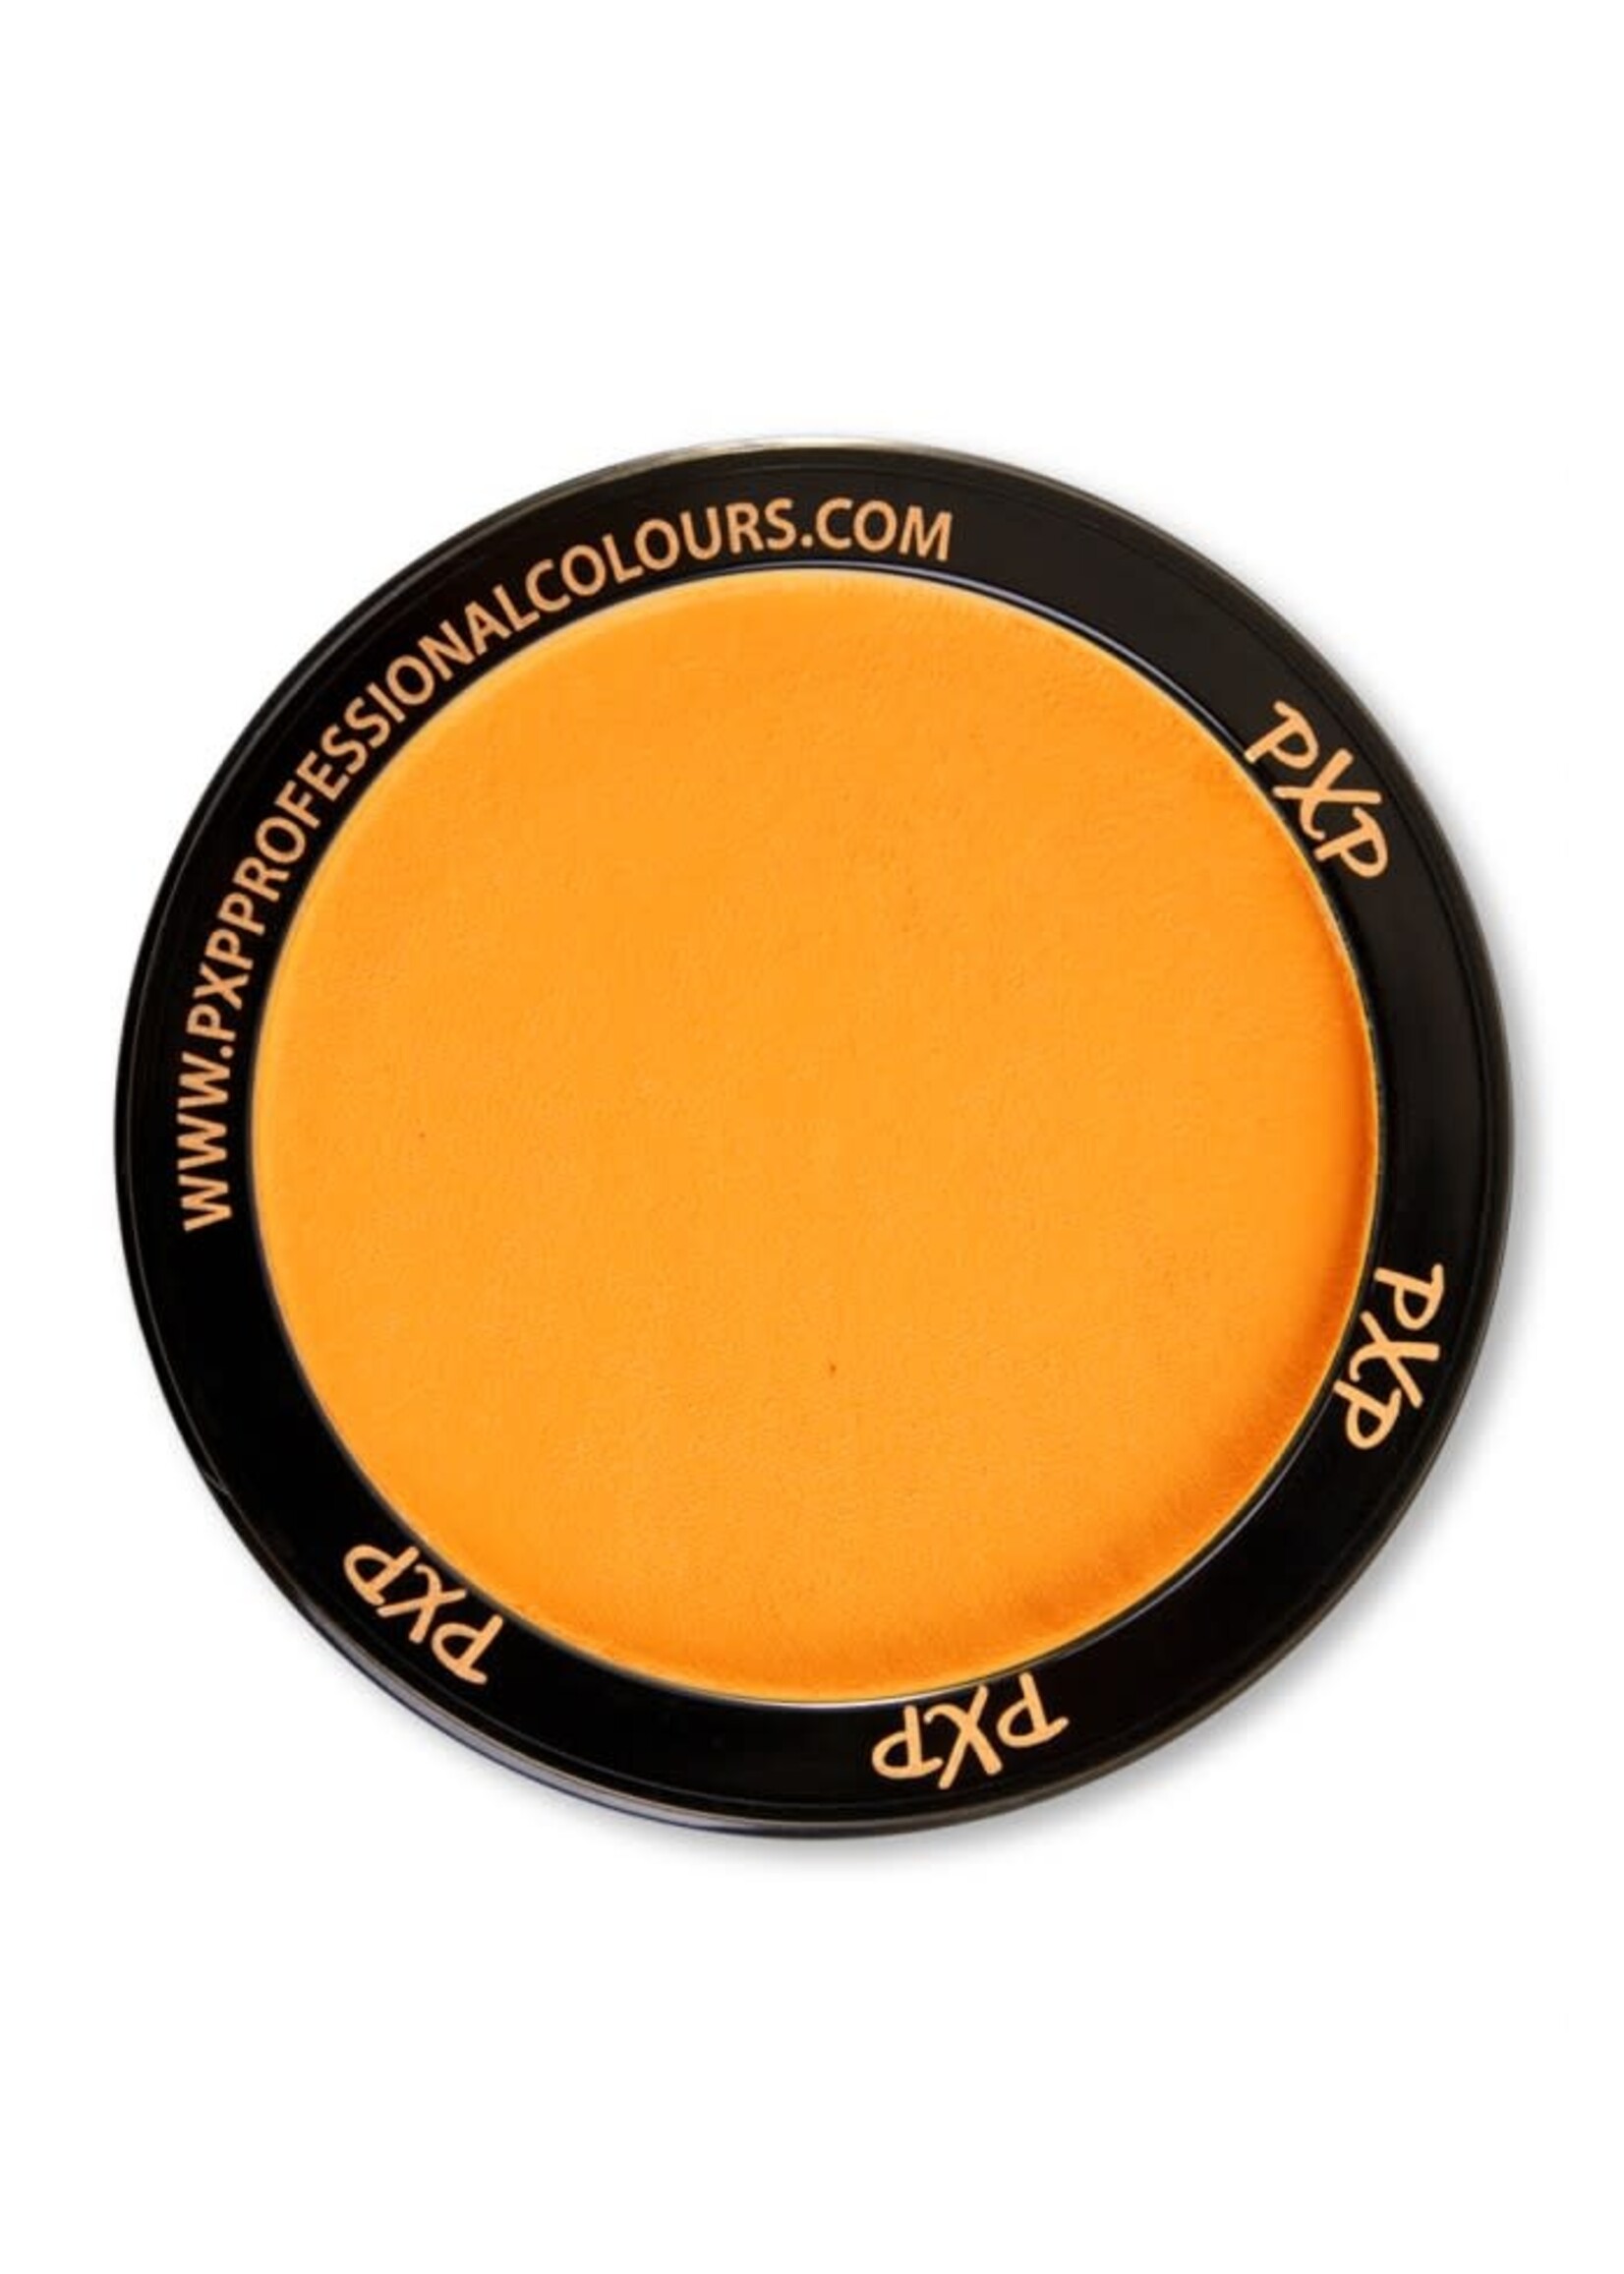 Feestkleding Breda PXP Professional Colours 10 gram Pastel Orange